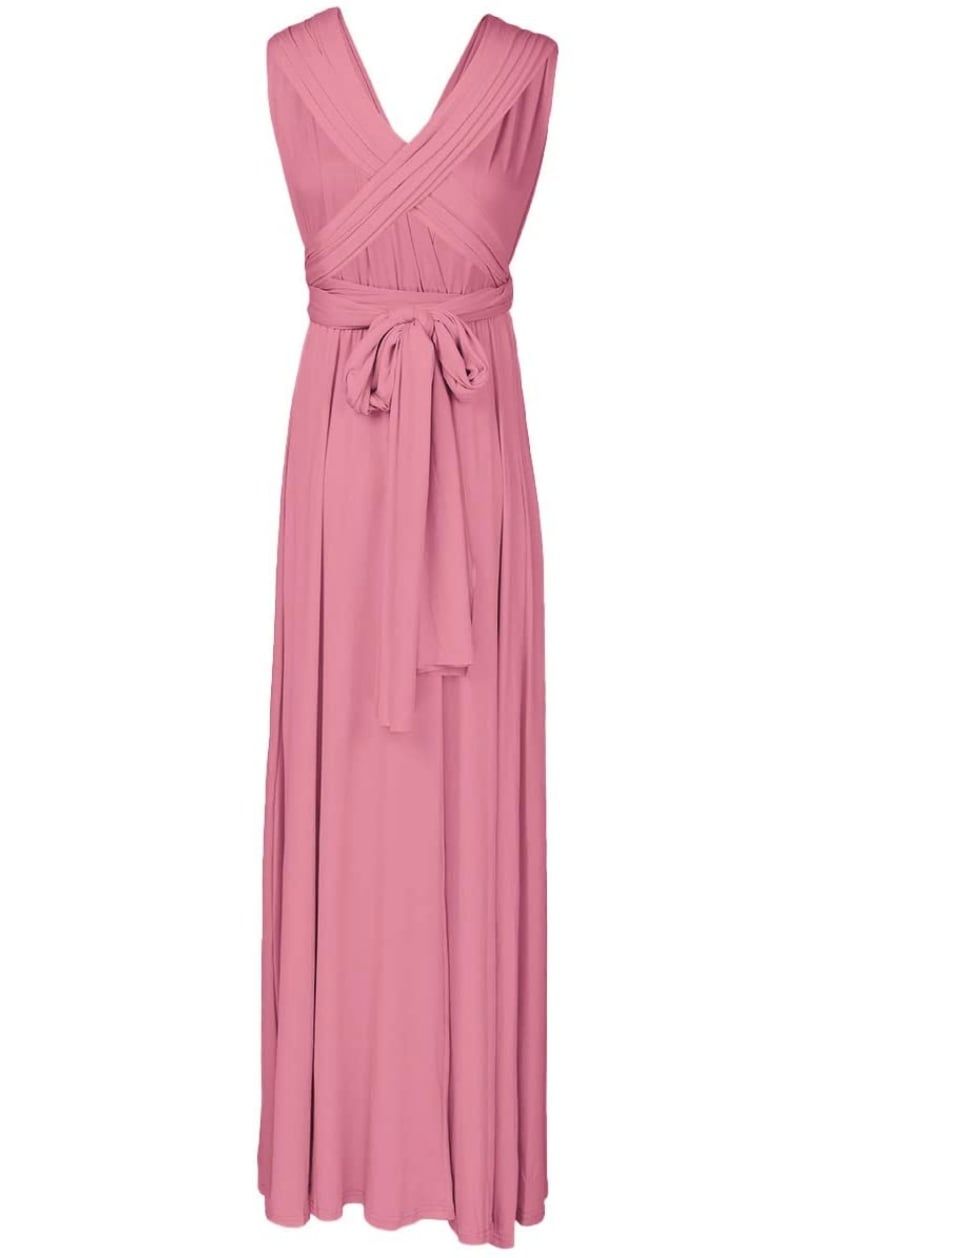 Style B073CGBPLG IWEMEK Size 12 Bridesmaid Pink Floor Length Maxi on Queenly